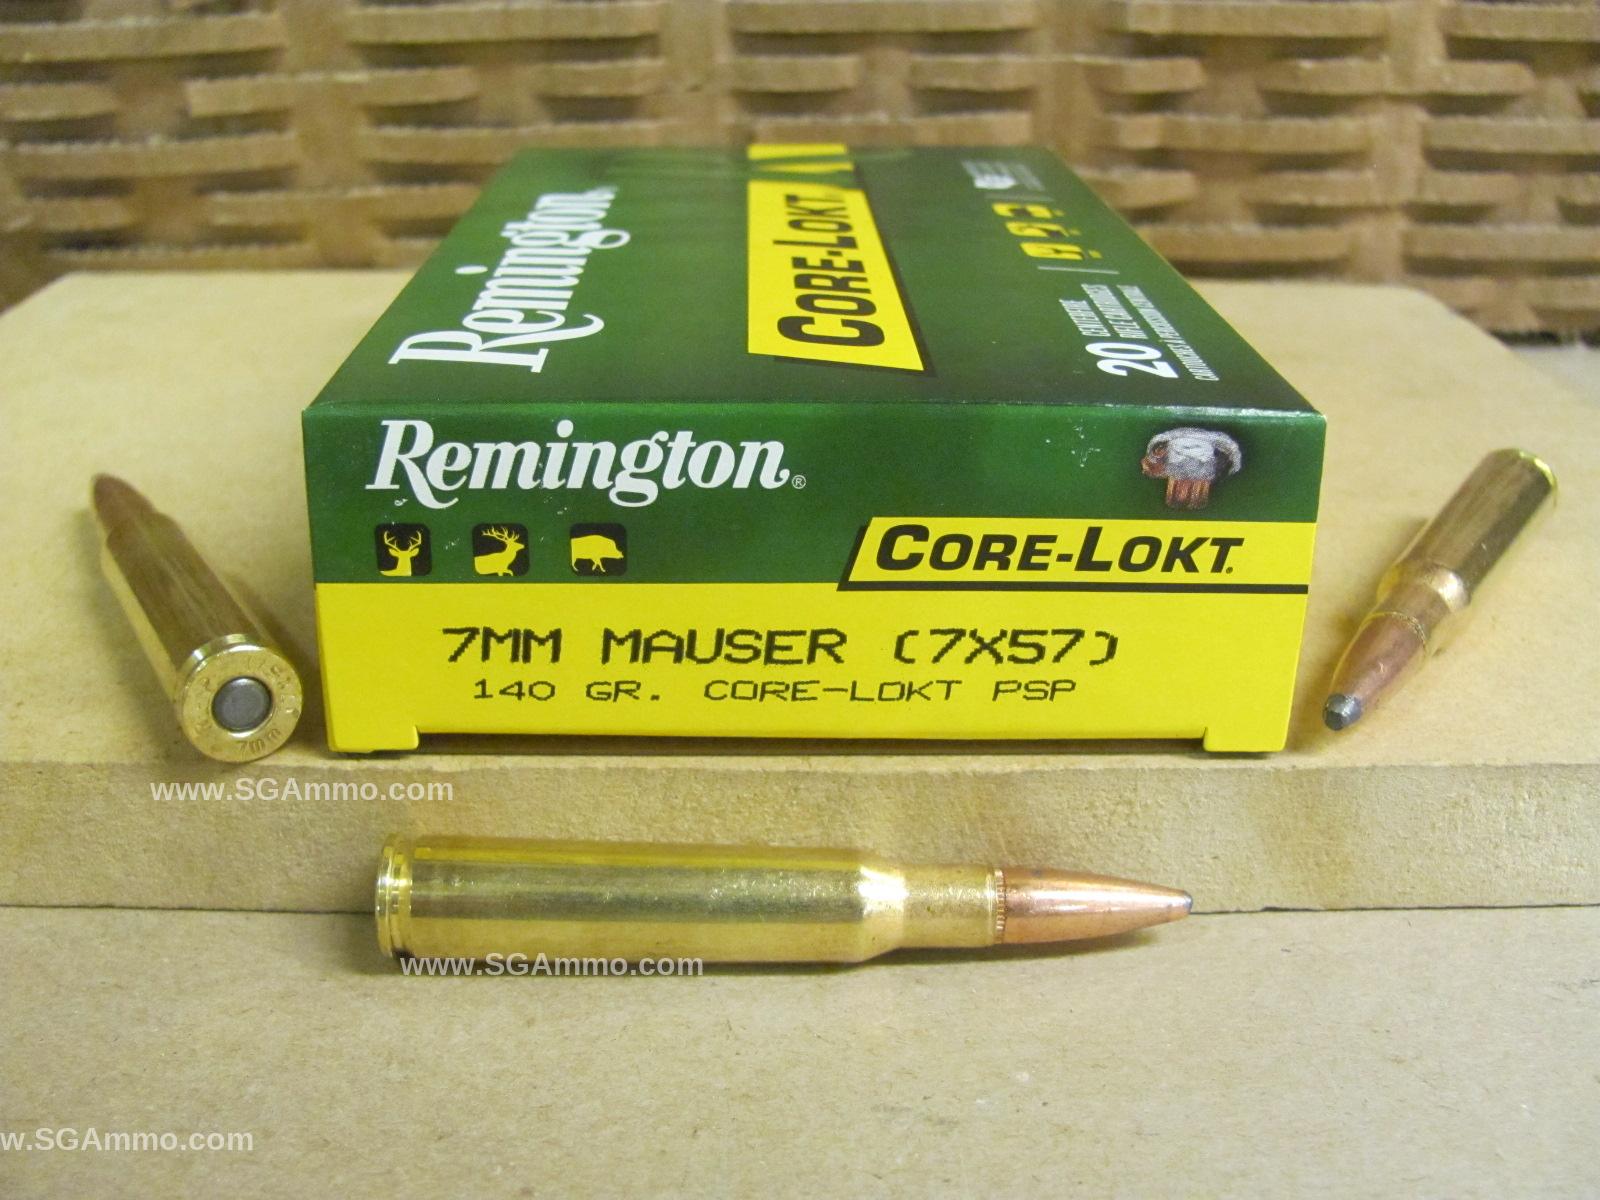 200 Round Case - 7mm Mauser 140 Grain Pointed Soft Point Core-Lokt Remington Ammo - R7MSR1